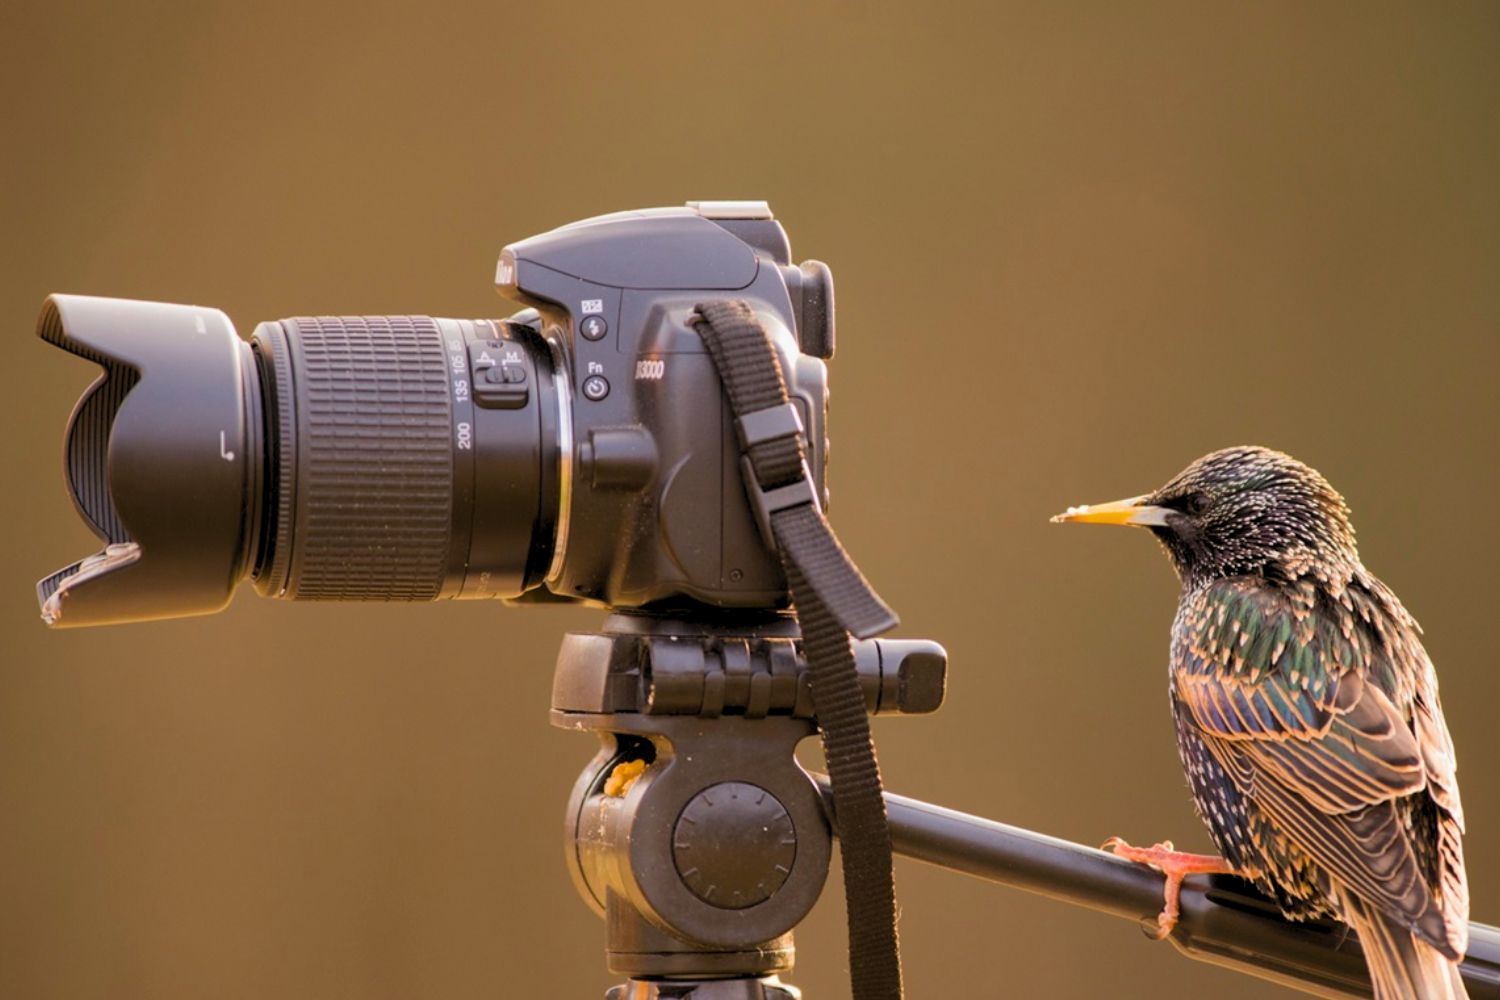 Superzoom bridge cameras for bird photography